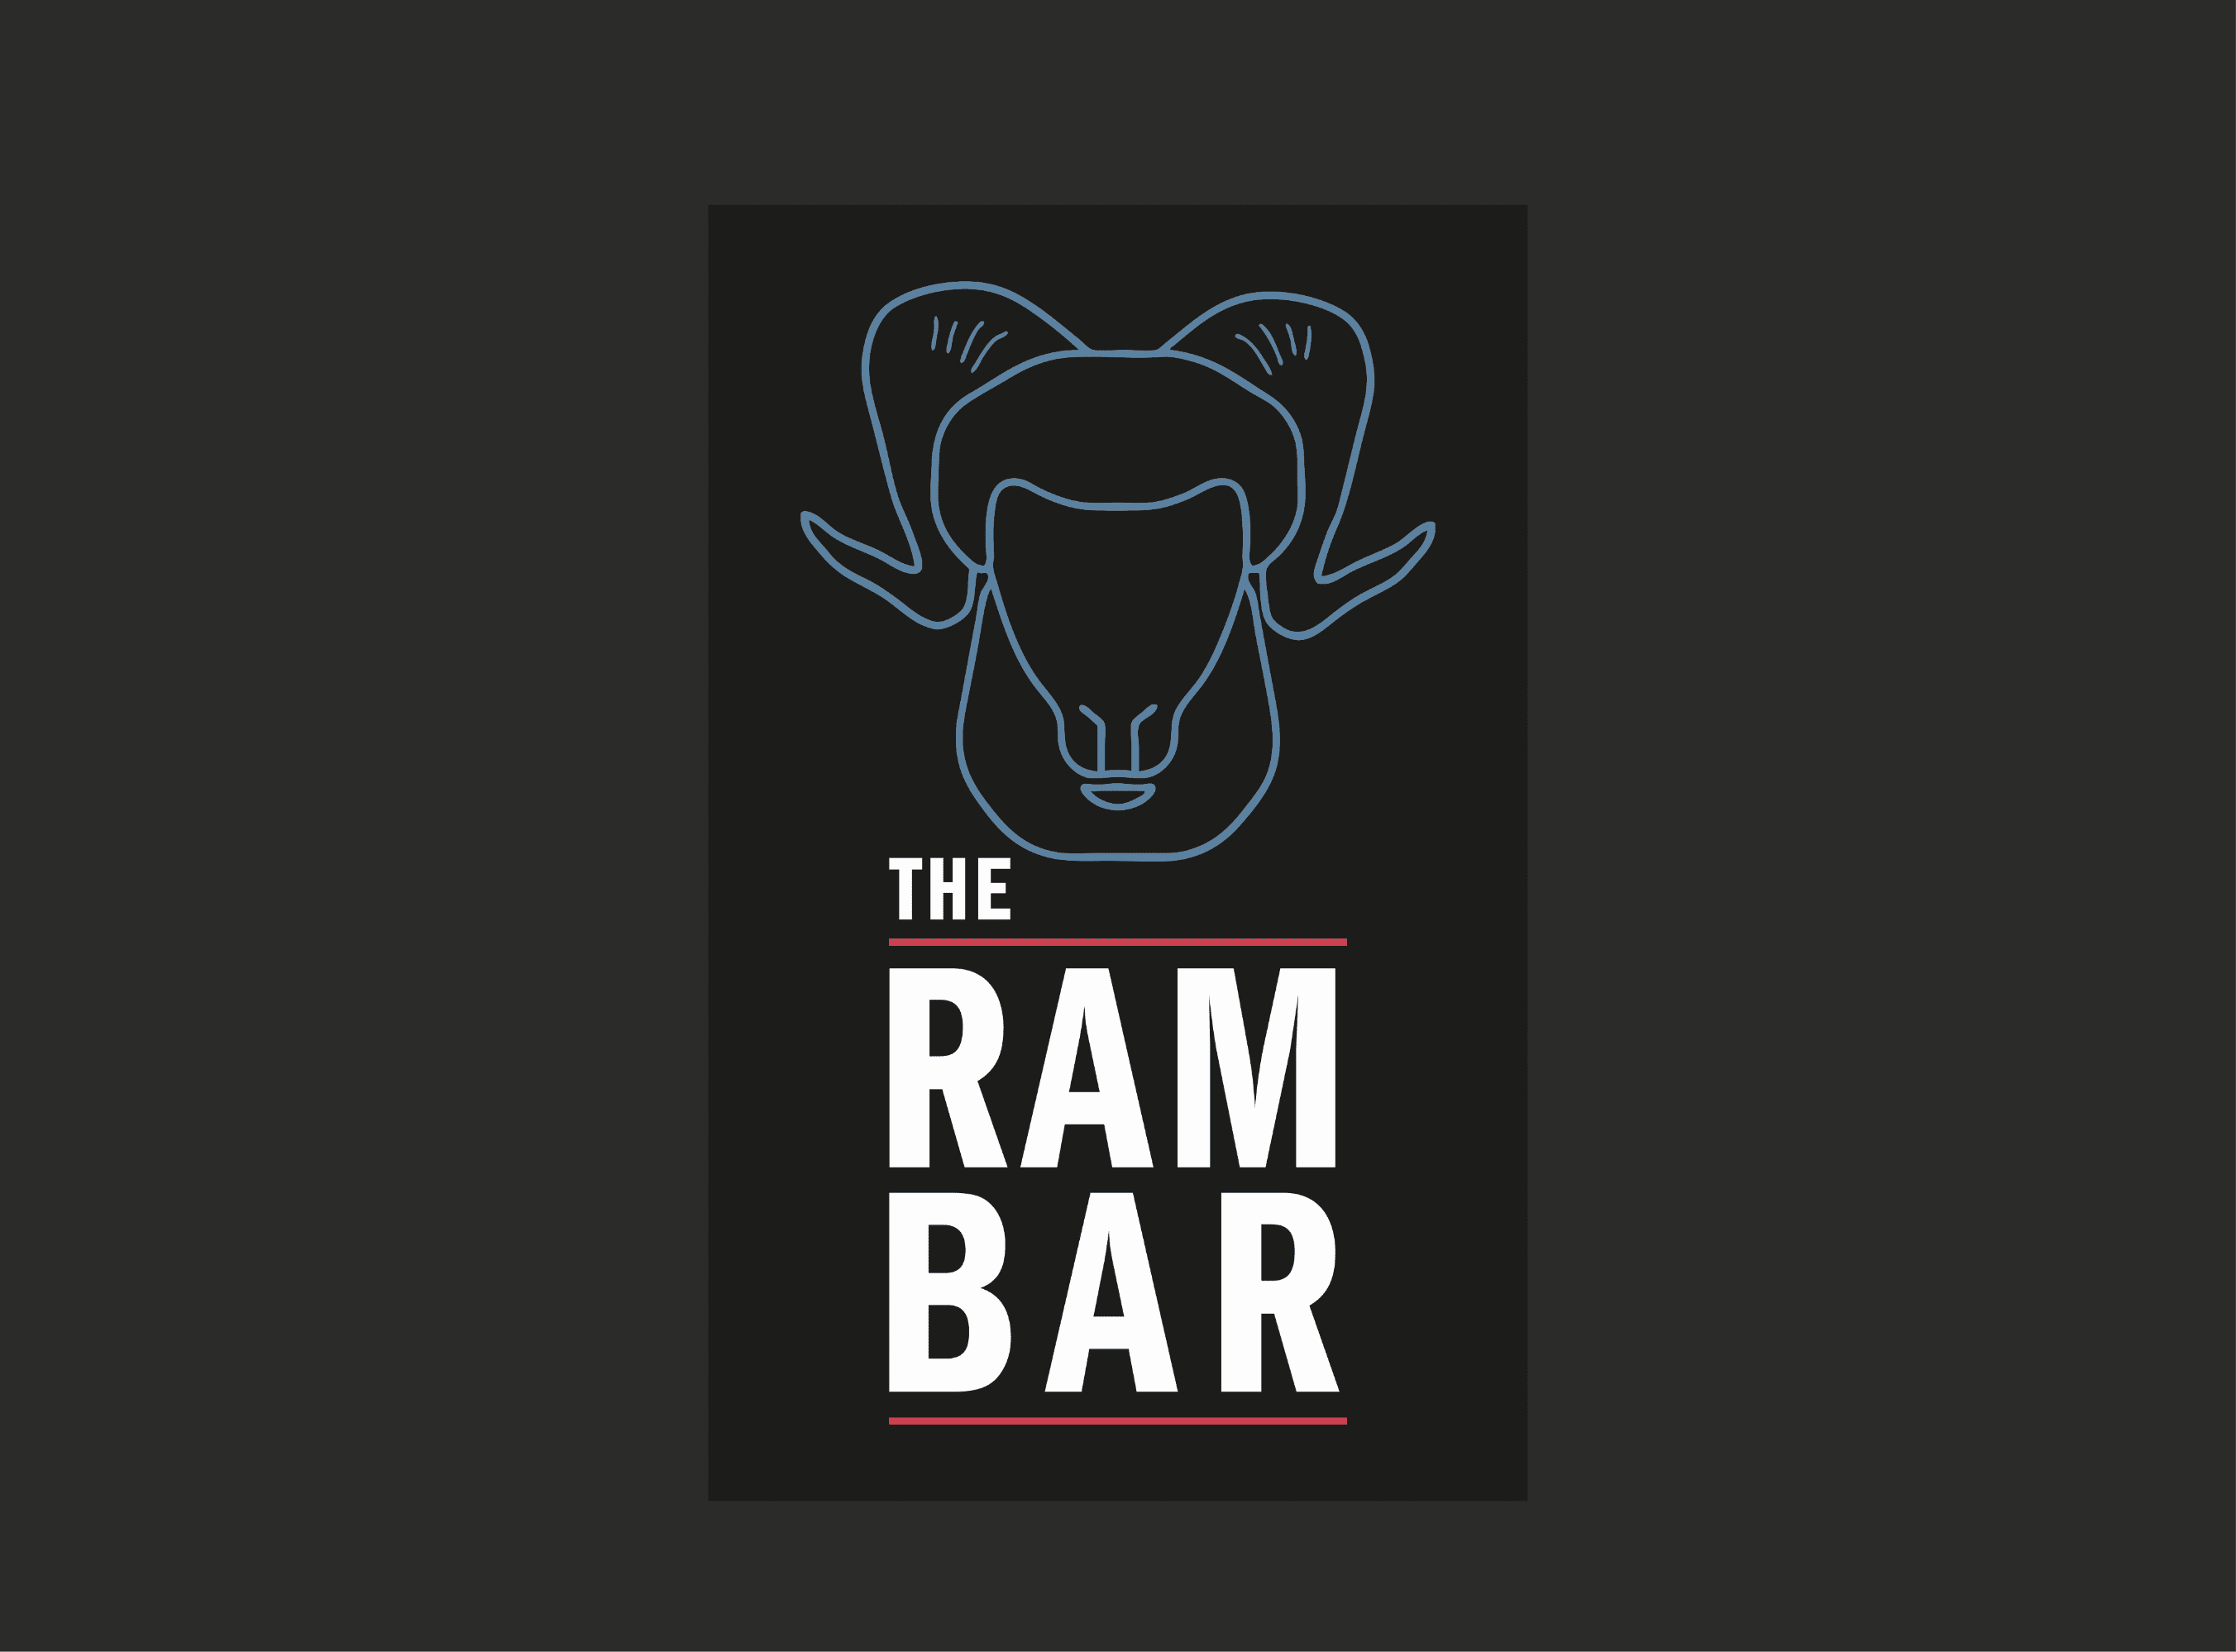 THE RAM BAR